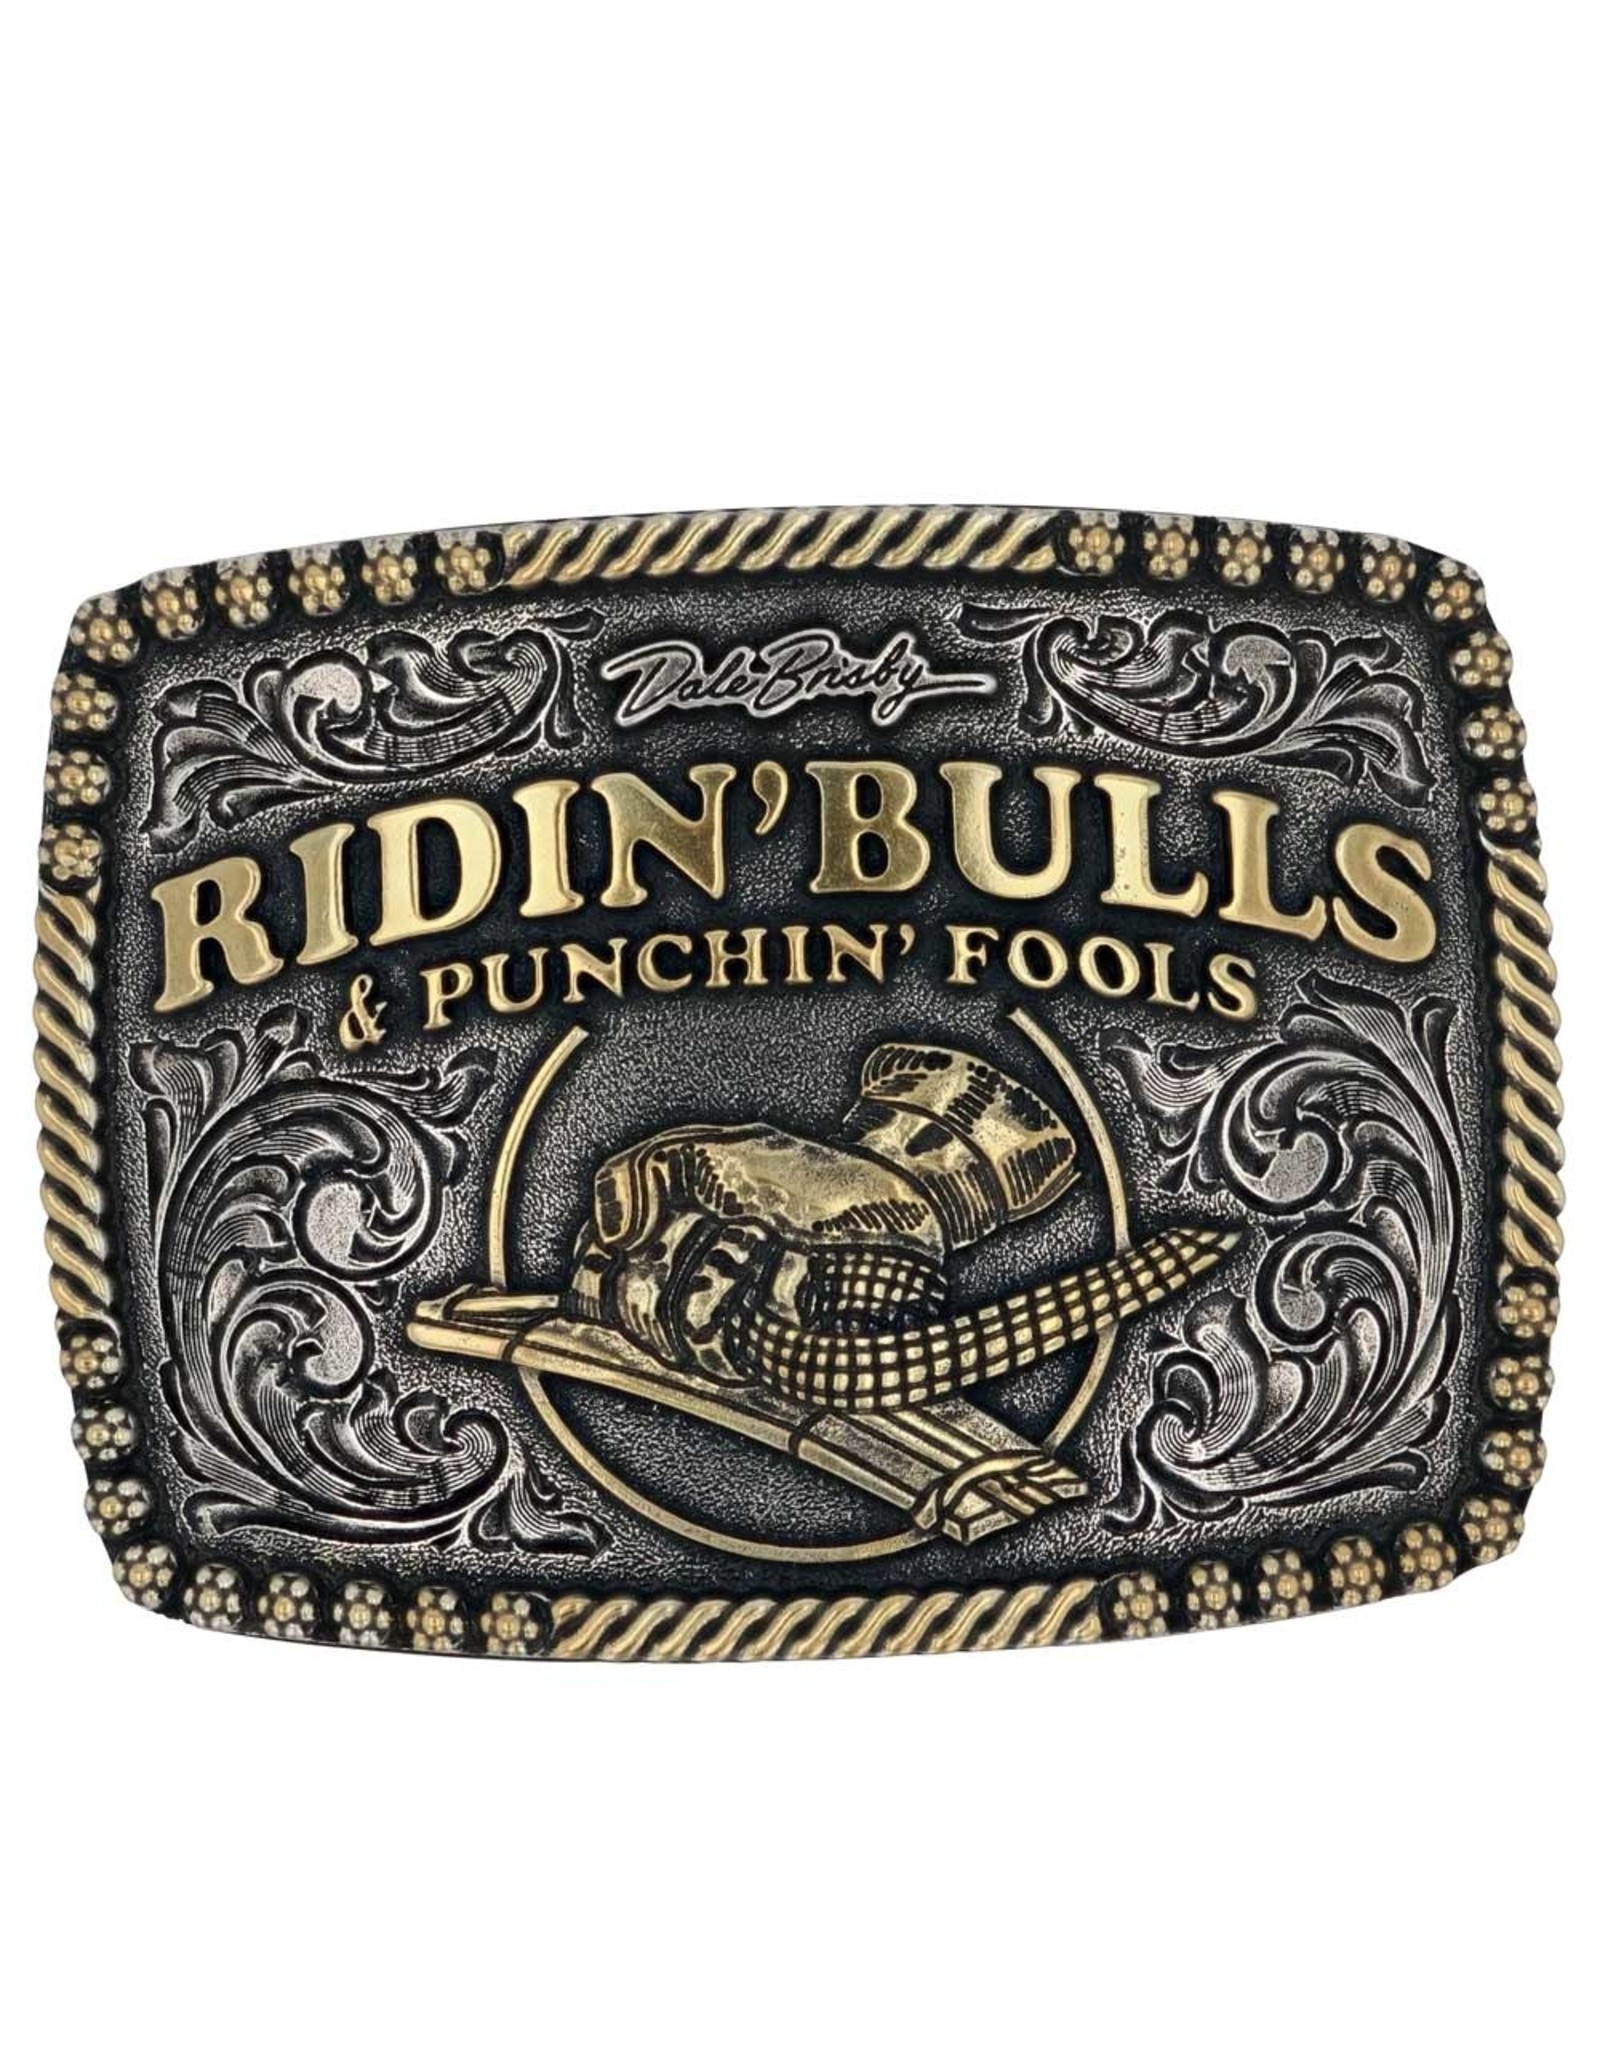 Attitude Jewelry Attitude Dale Brisby Bulls & Fools A917DB Belt Buckle